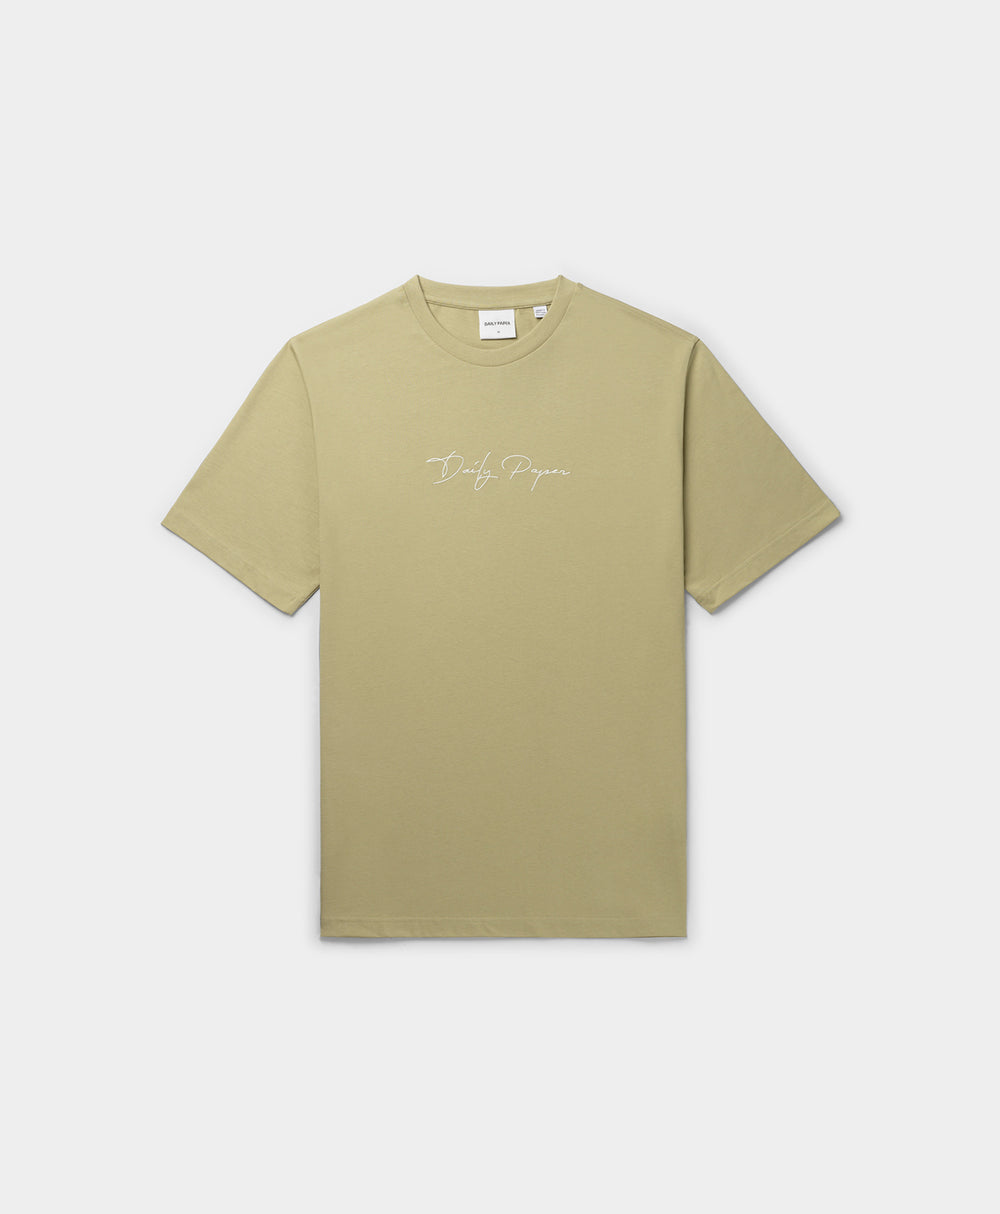 DP - Twill Beige Escript T-Shirt - Packshot - Front